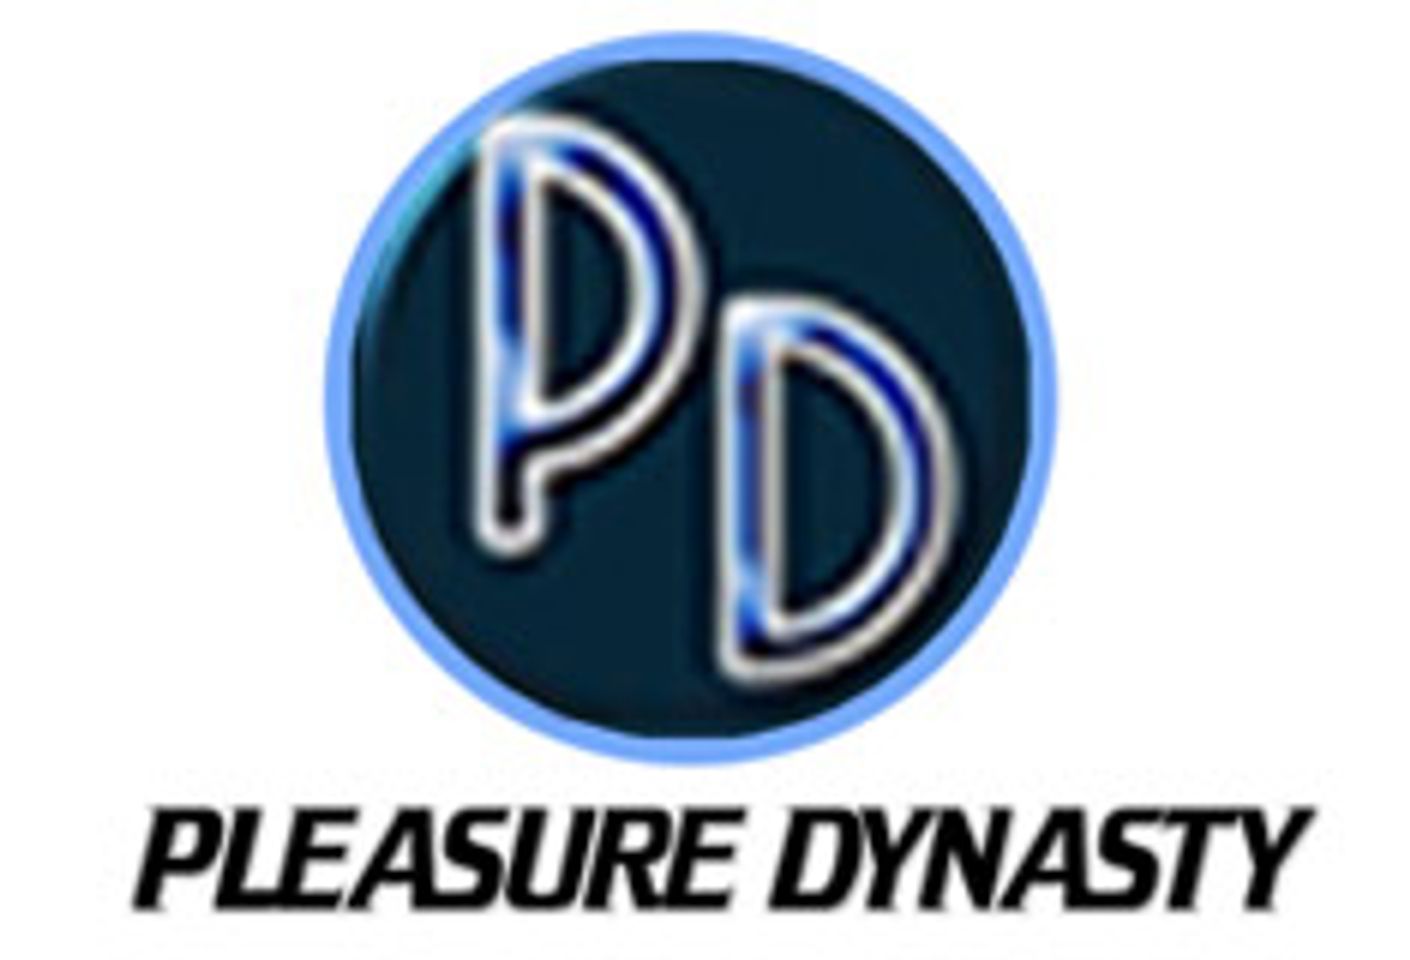 Pleasure Dynasty's 'Super Porn' Trailer Premieres on Fleshbot.com